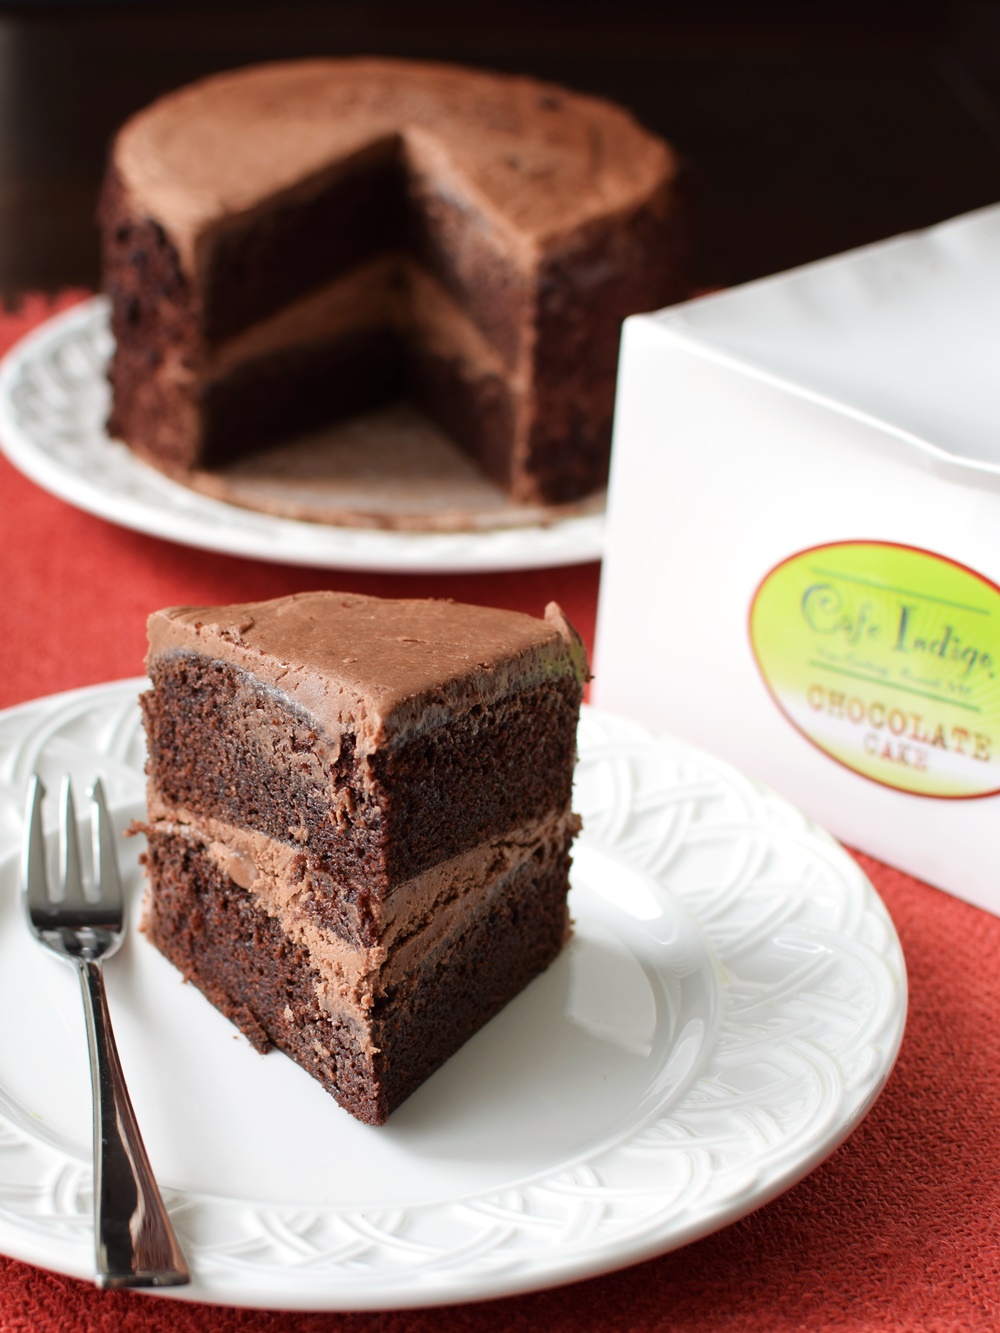 Cafe Indigo Vegan Goodness Layer Cakes - Amazingly dairy-free & egg-free! (chocolate cake pictured)